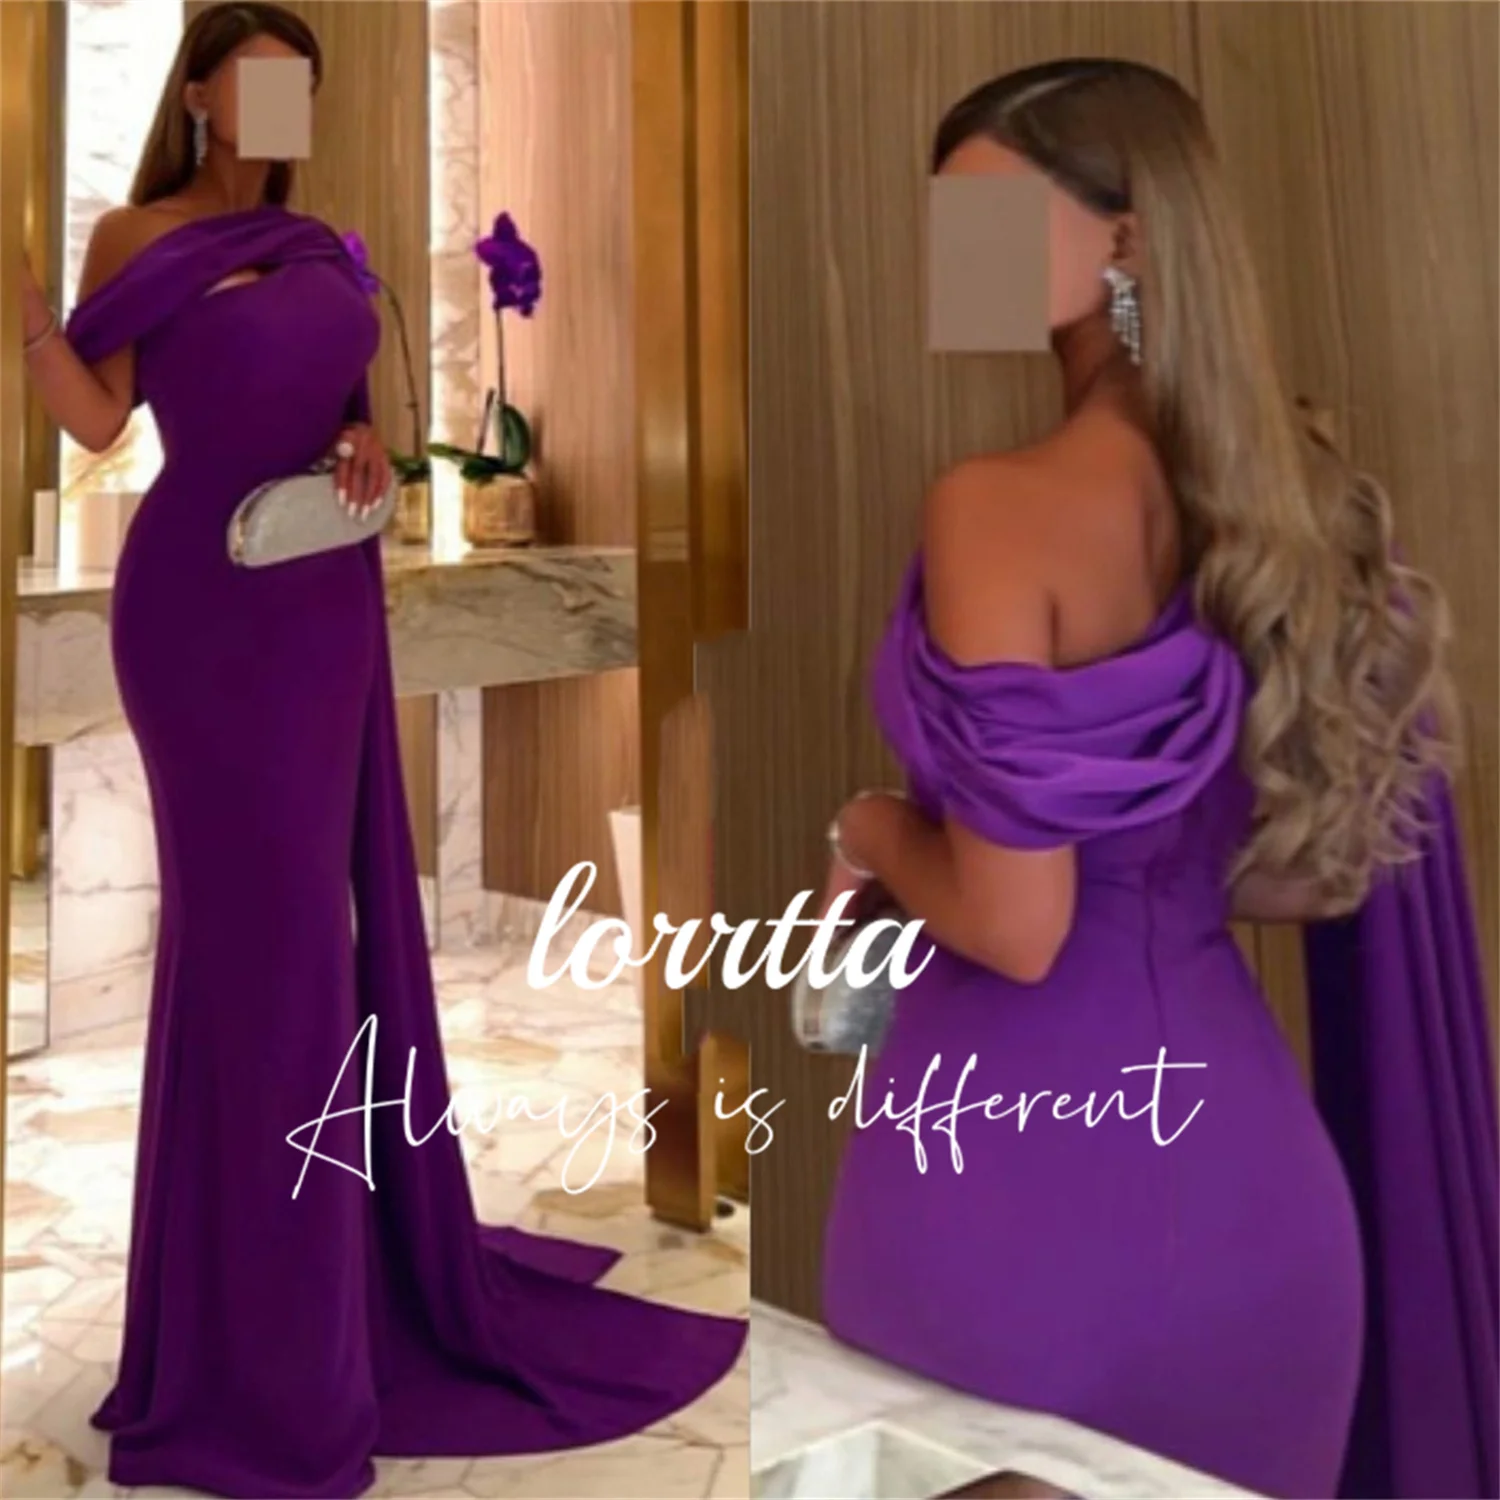 

Lorrtta Vintage Long One Shoulder Purple Ball Gown Mermaid Matte Satin Evening Gown Party Dress فساتين للحفلات الراقصة السهرة